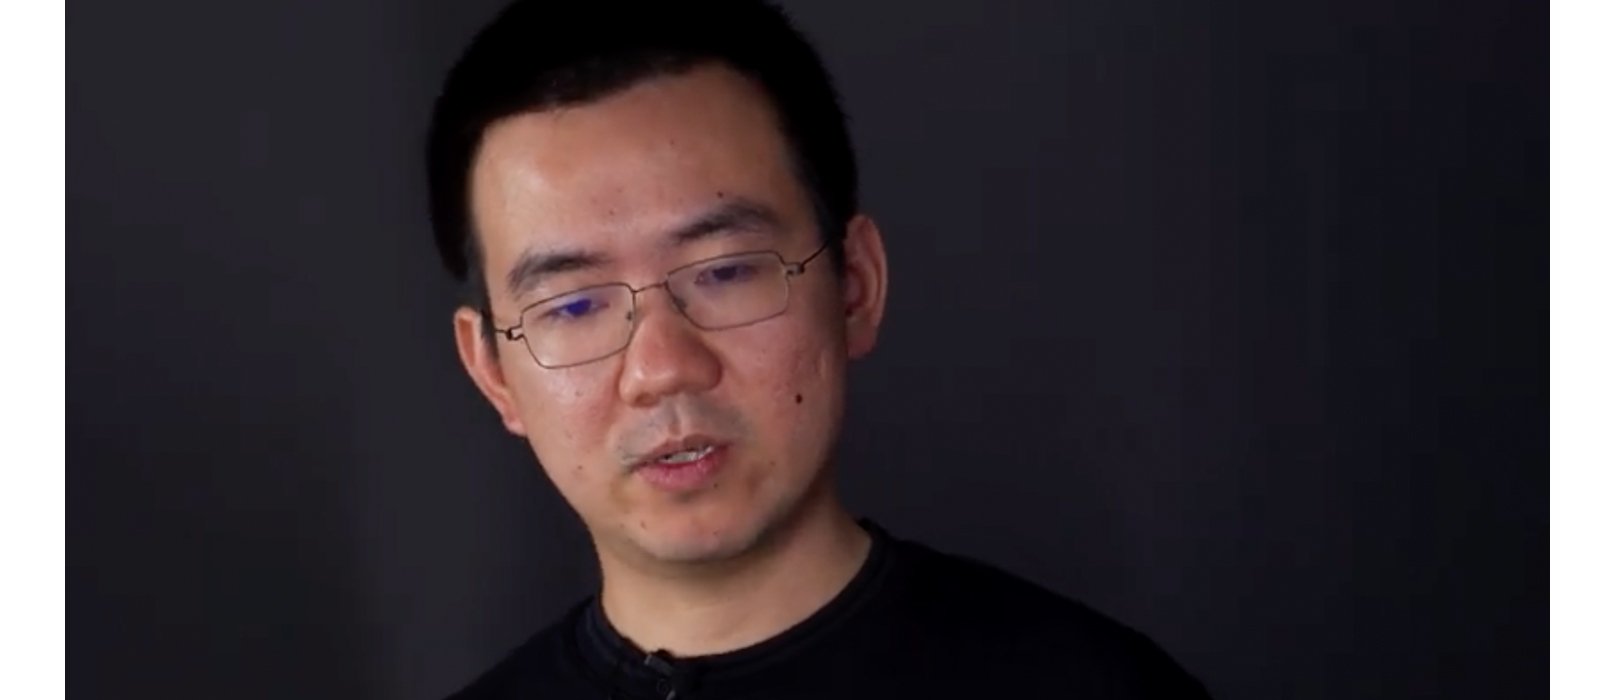 Bitmain's Jihan Wu Talks Mining and Industry Growth With Bitcoin.com's CEO